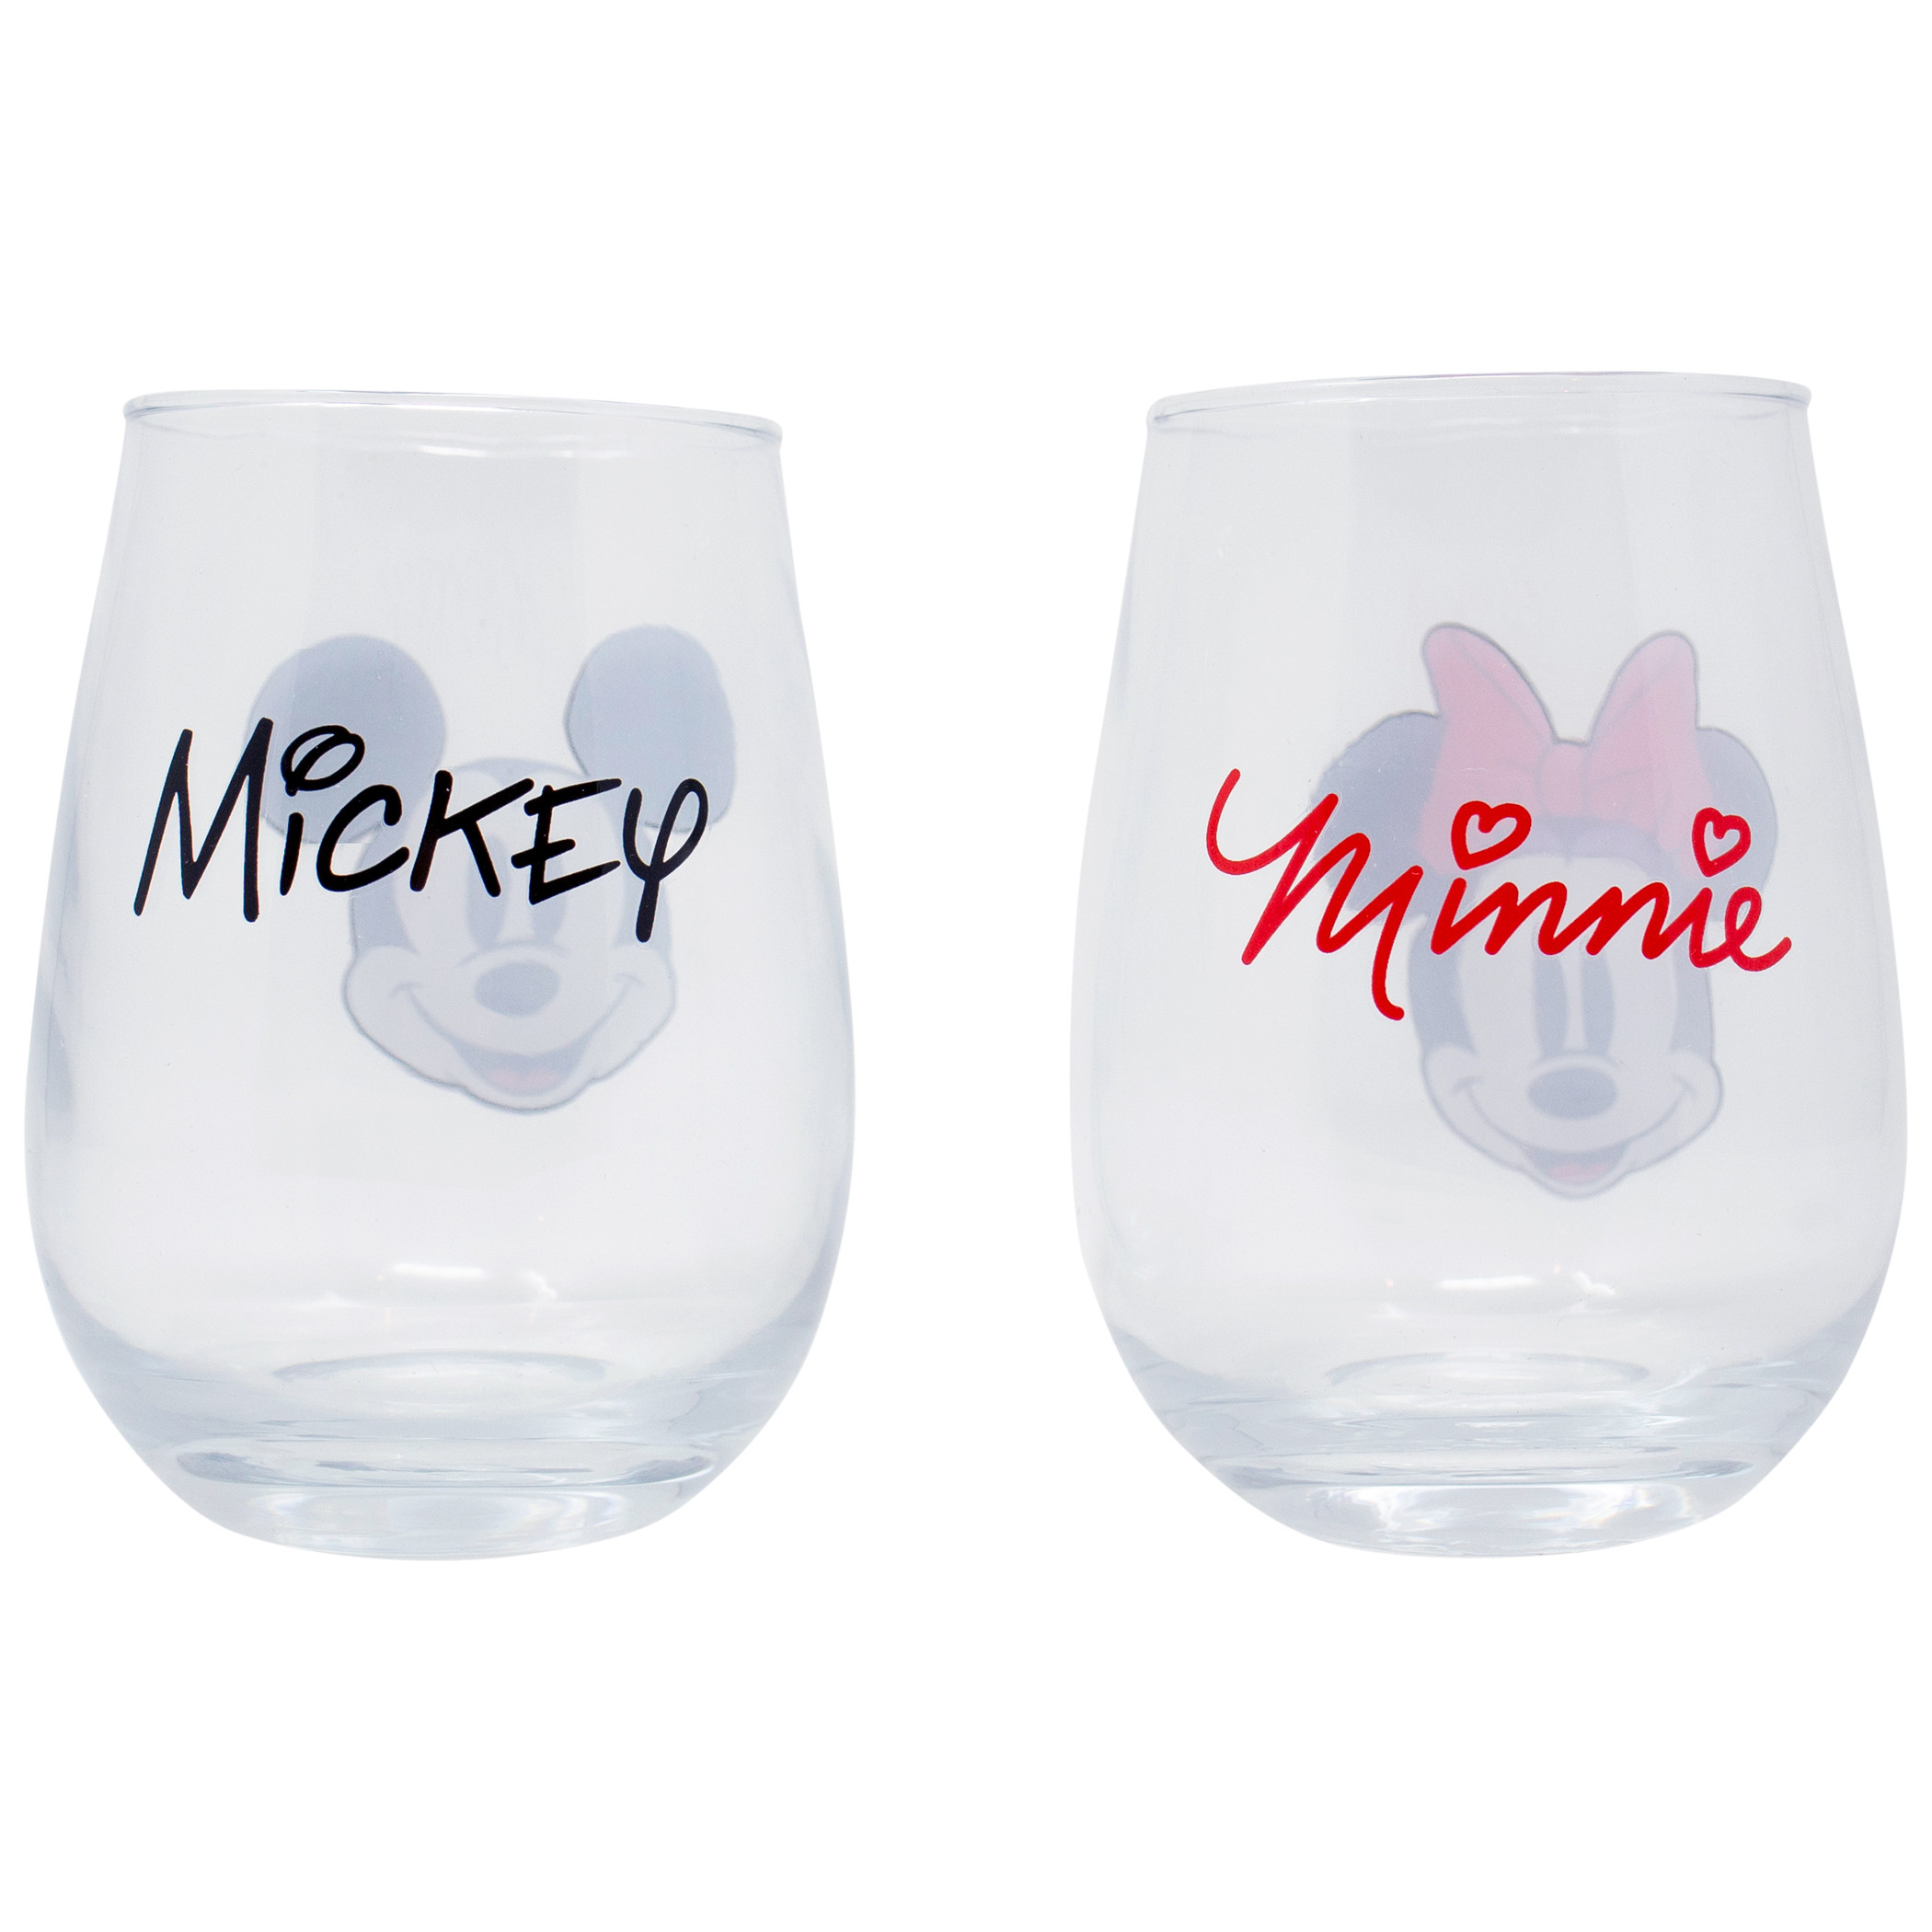 Disney Wine Glass - Mickey Mouse